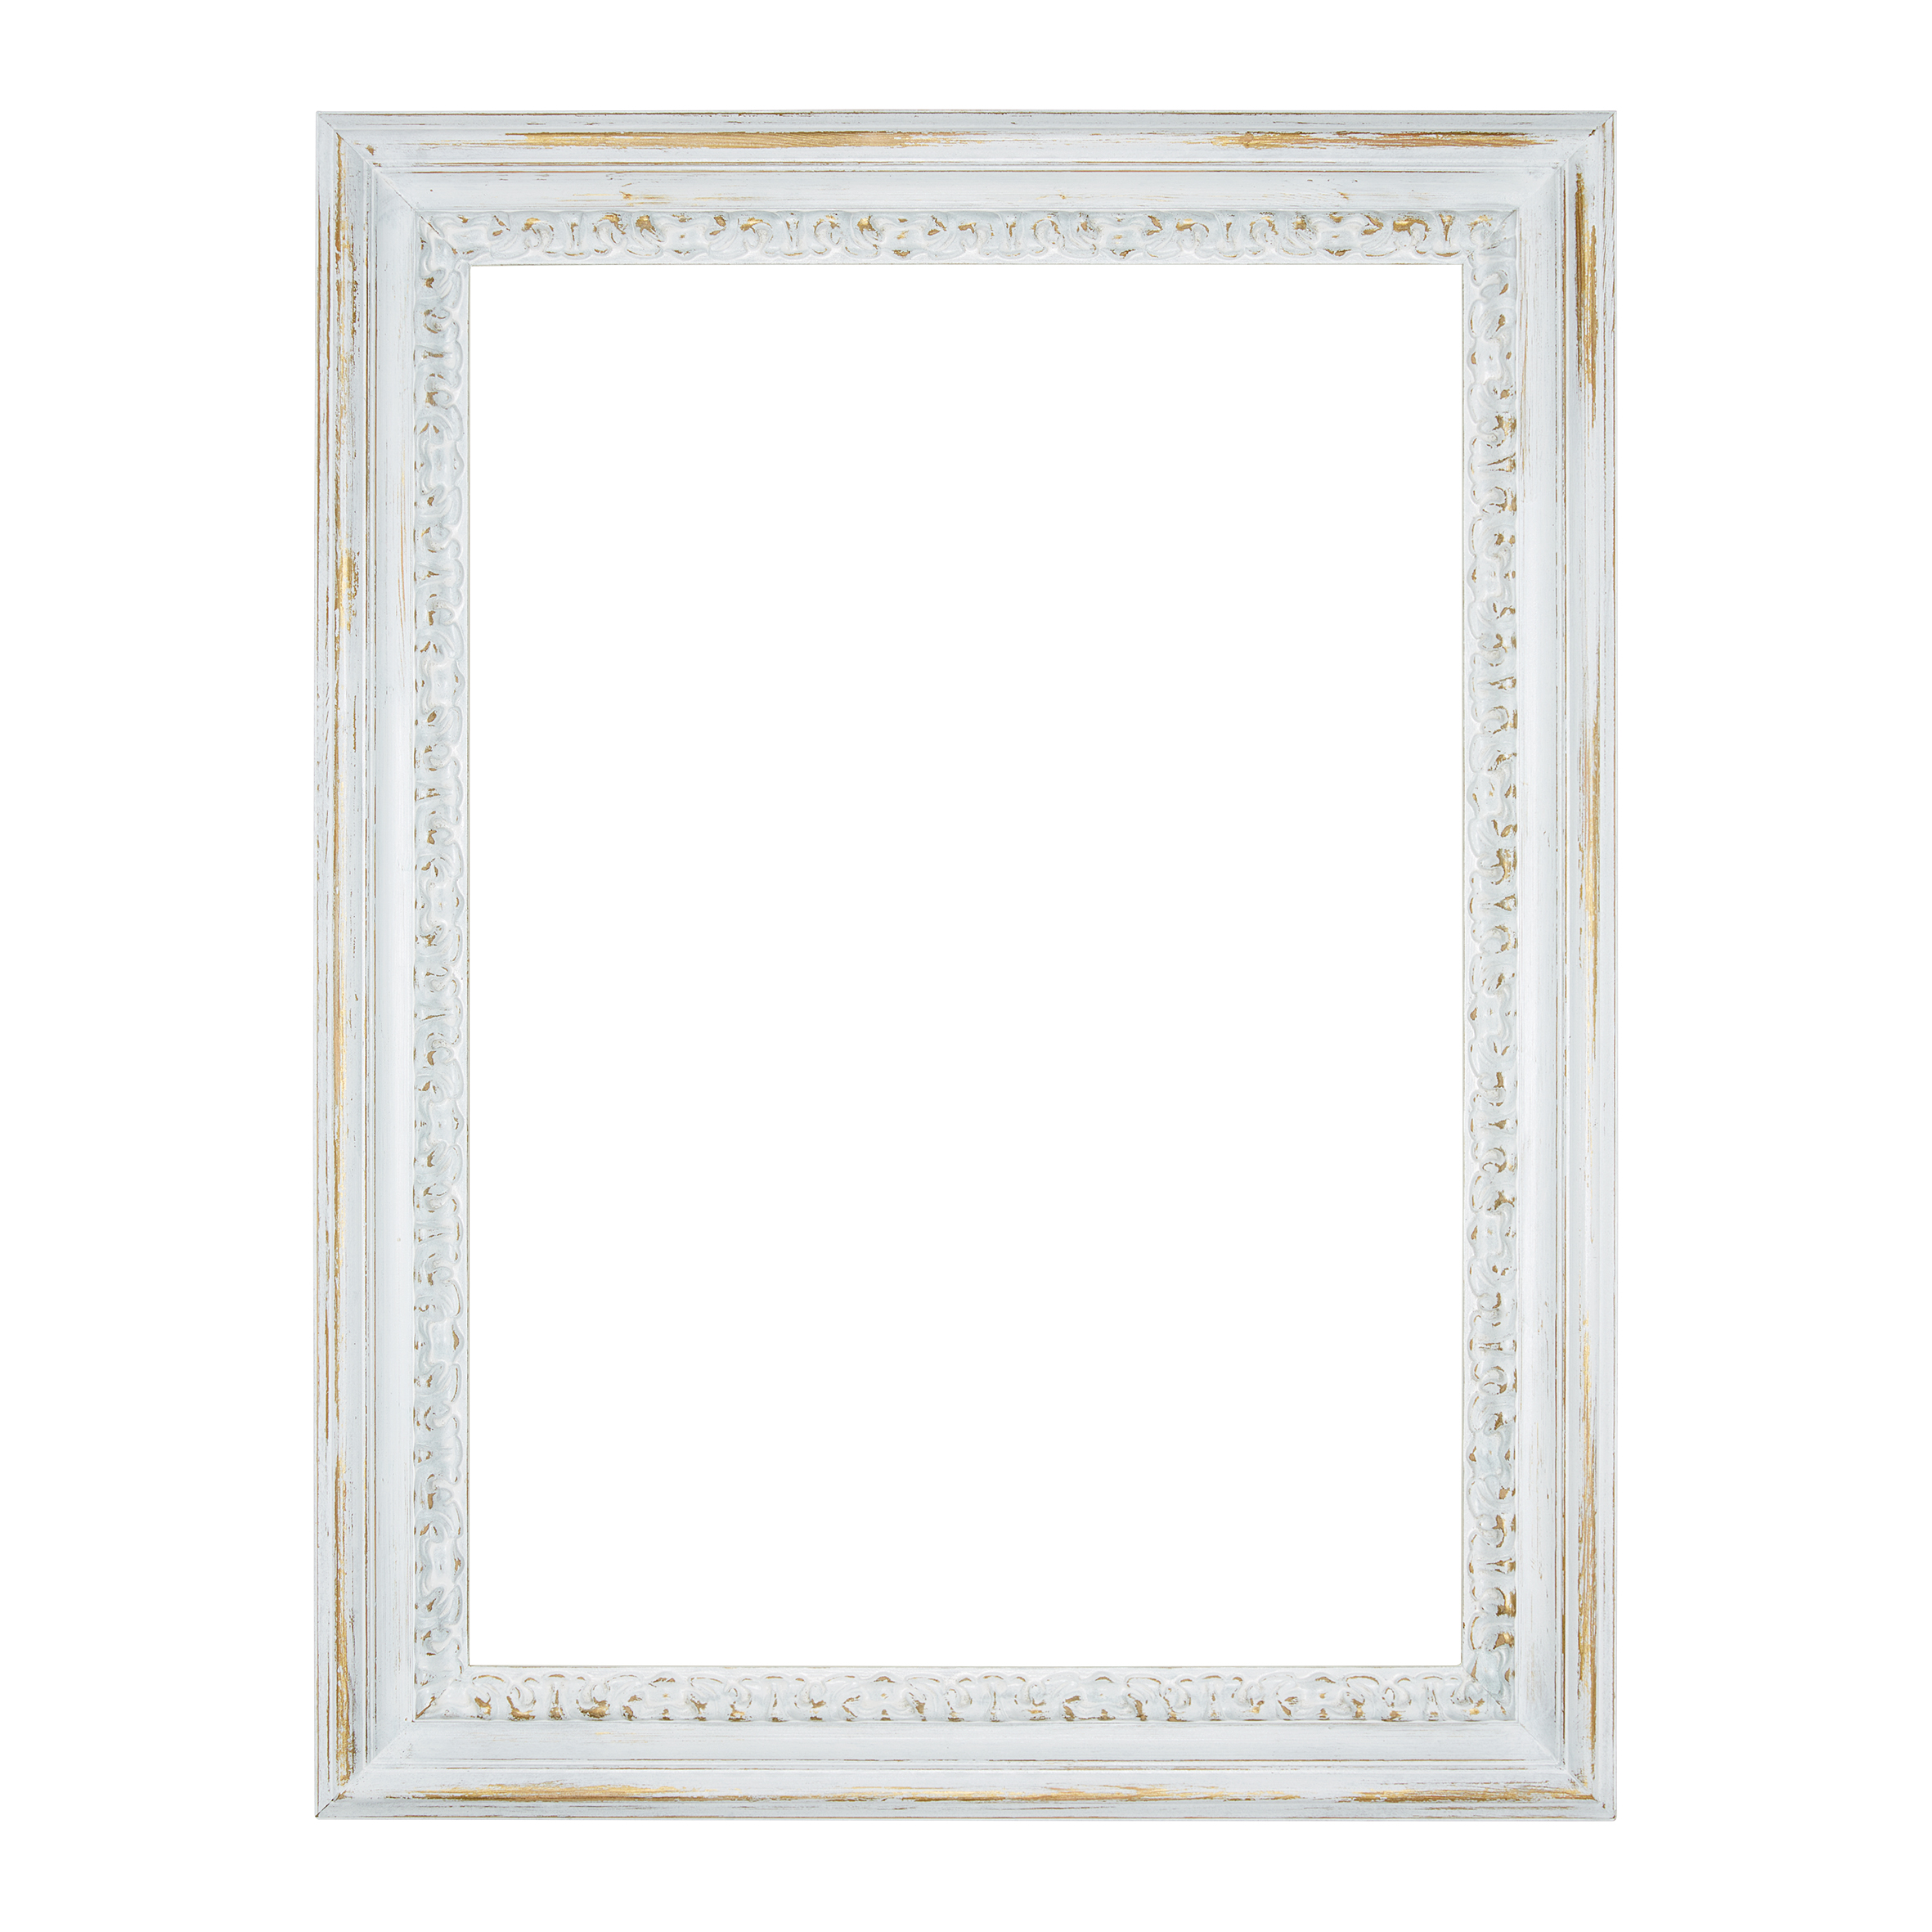 Wandspiegel Modell Nimes, Farbe. Gold/Weiß, Facettenspiegel, rechteckig, Holz, Innenbereich, modern, ASR-Rahmendesign, Shabby-Chic, Ansicht Front